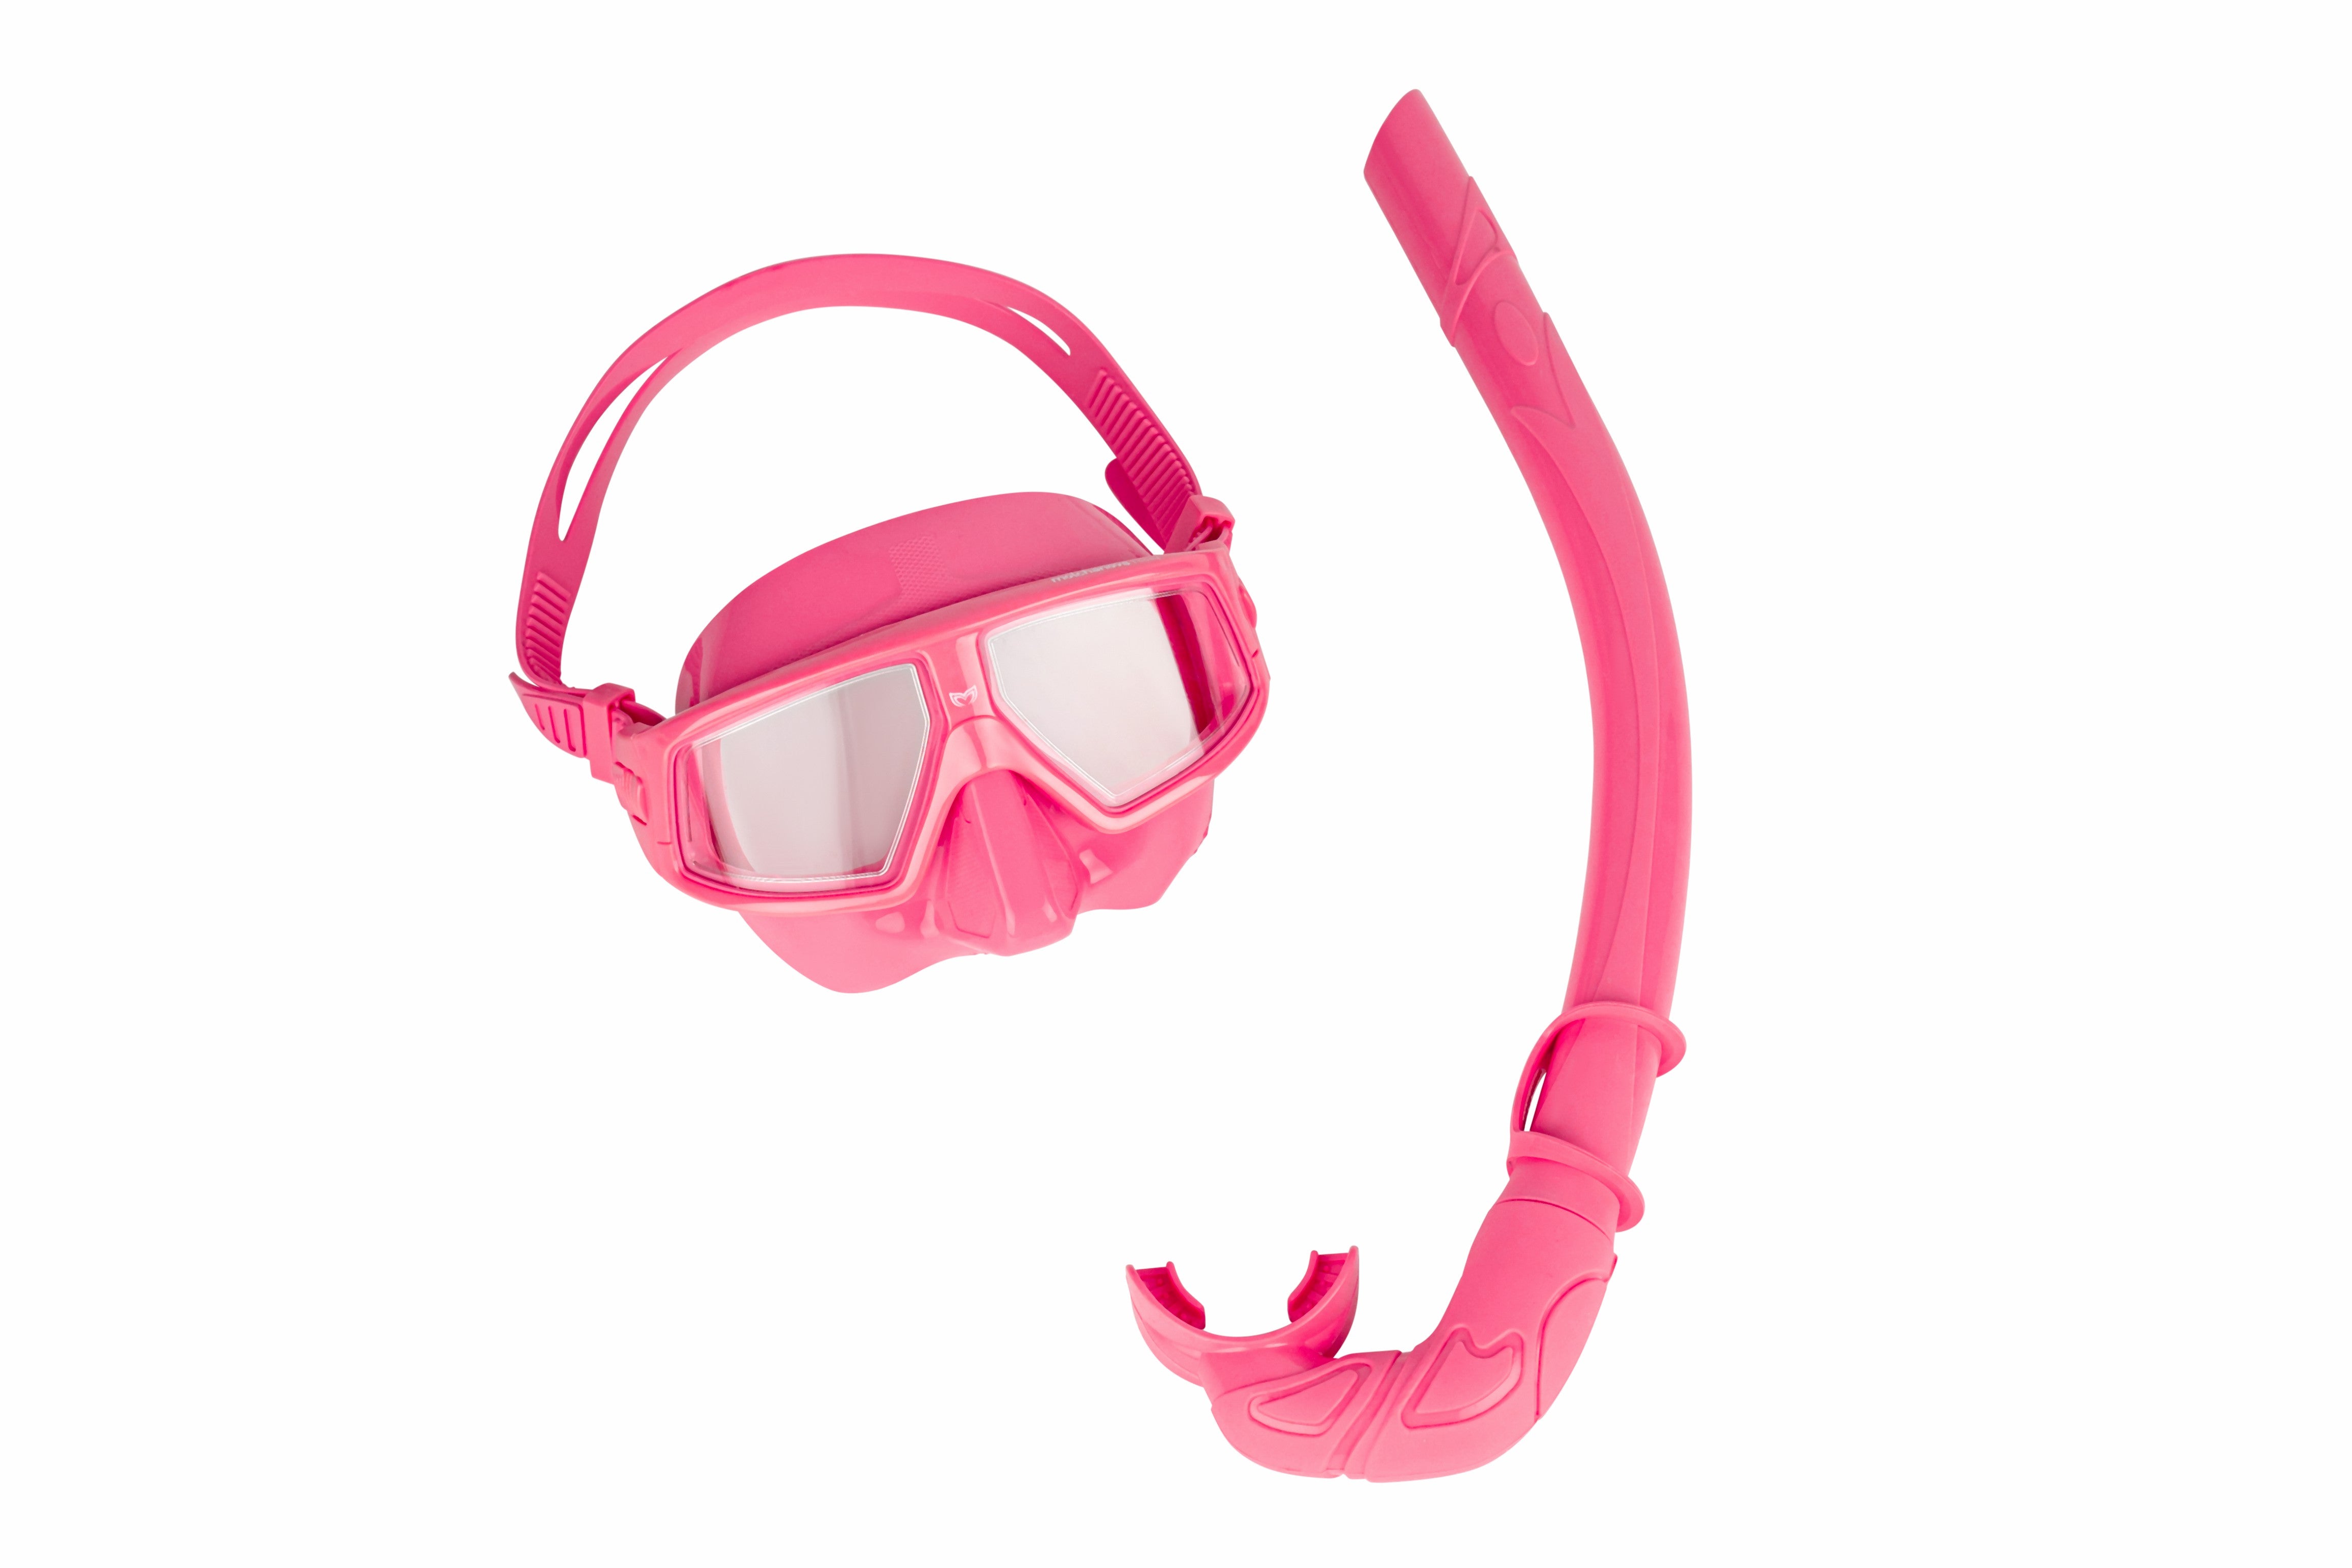 CORE Freediving Mask & Snorkel Bundle